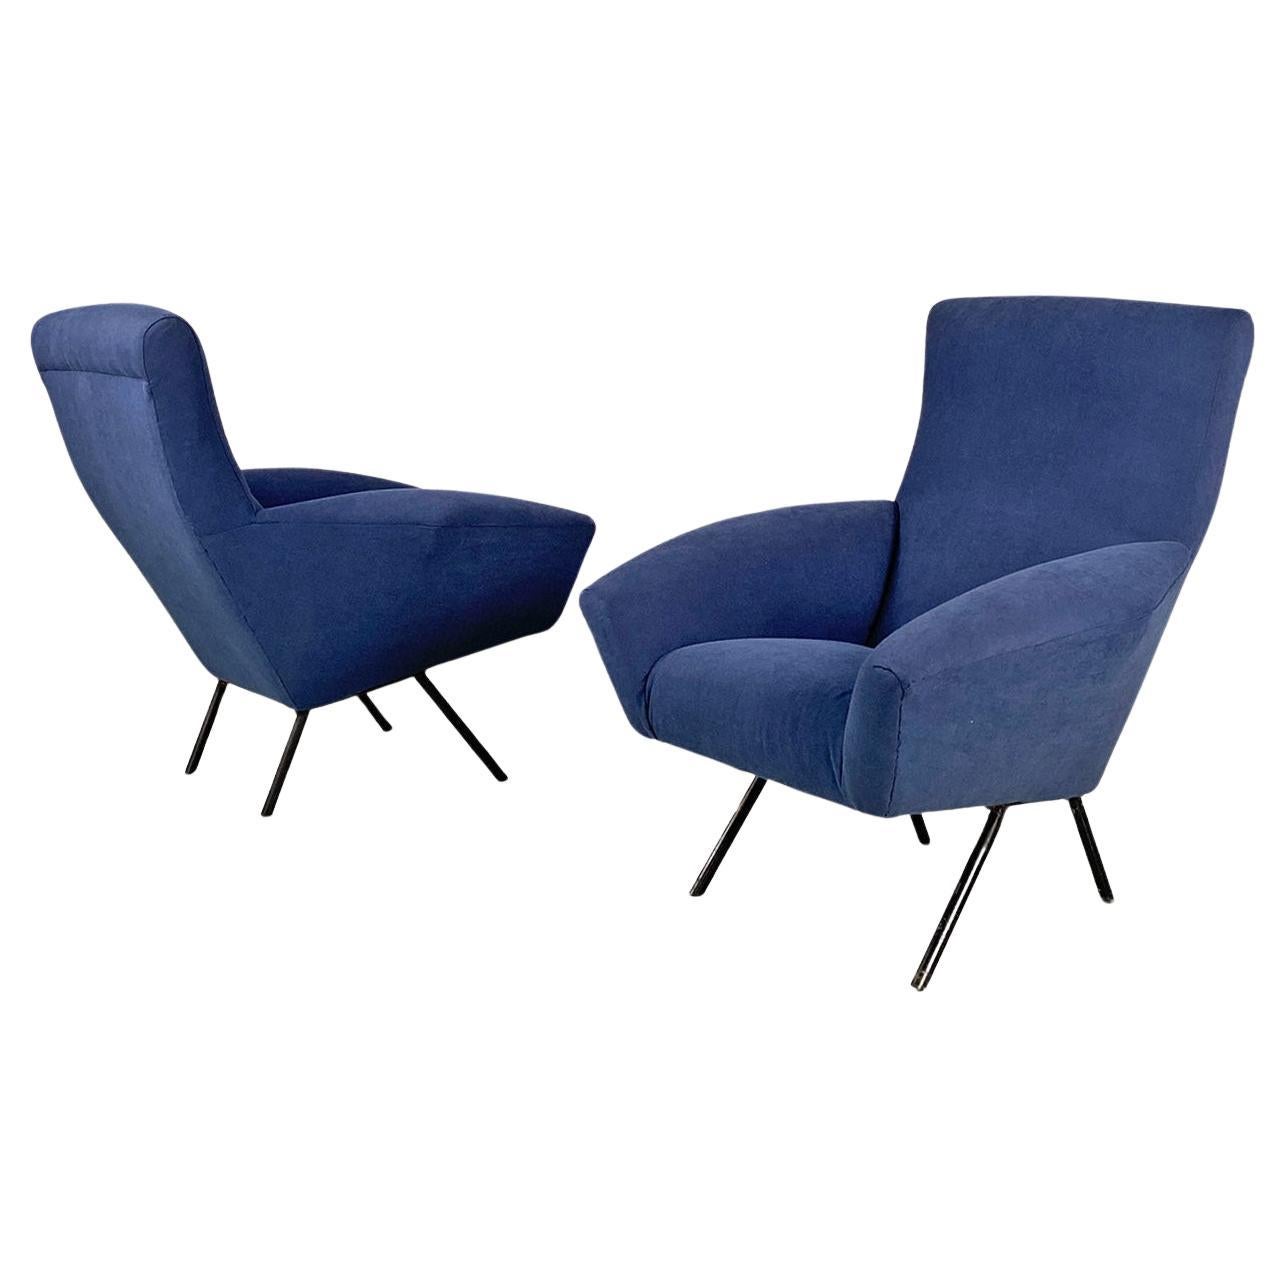 Italian mid-century modern blue fabric and black metal armchairs, 1960s